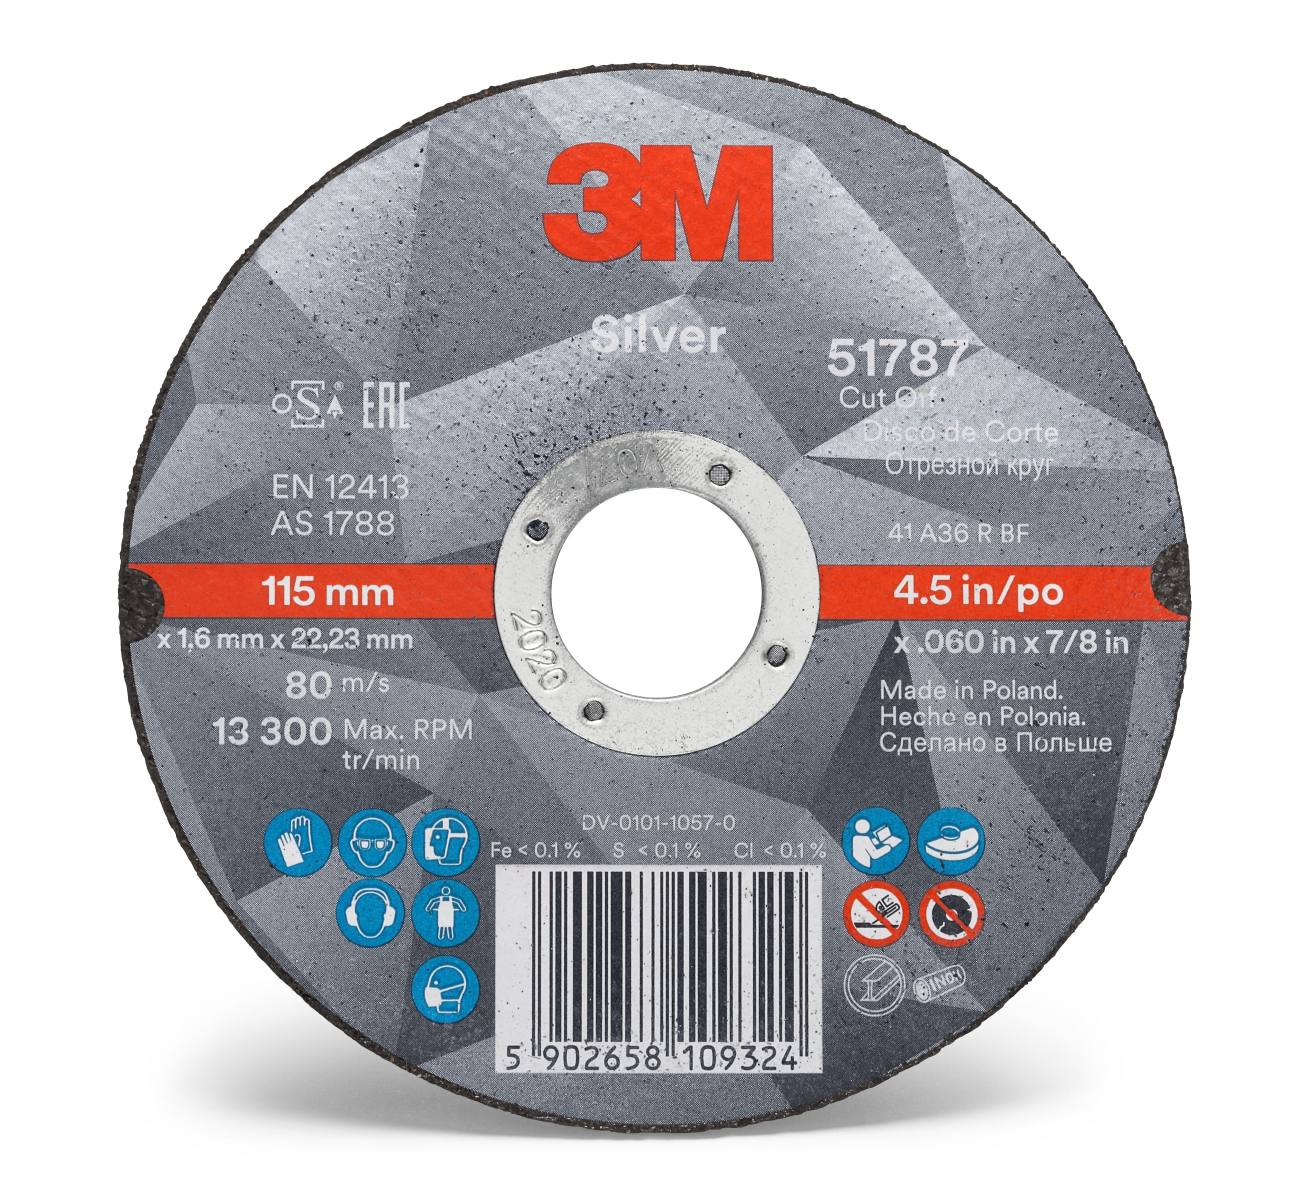 3M Silver Cut-Off Wheel cutting disc, 115 mm, 1.0 mm, 22.23 mm, T41, 51785